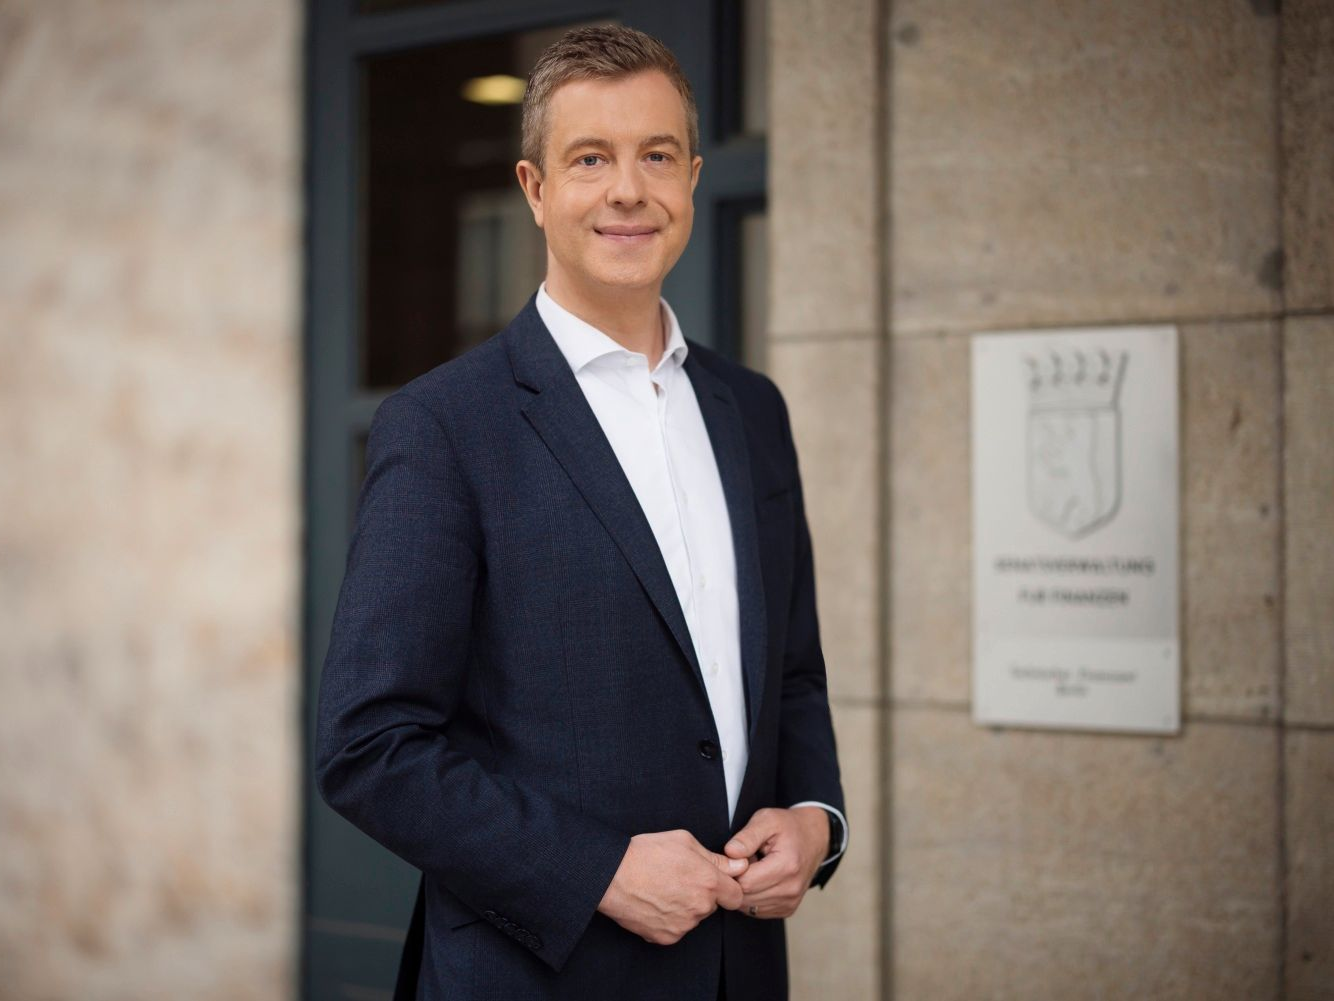 Mehr Geld für Beamte: Finanzsenator Stefan Evers will Personalmangel entgegenwirken